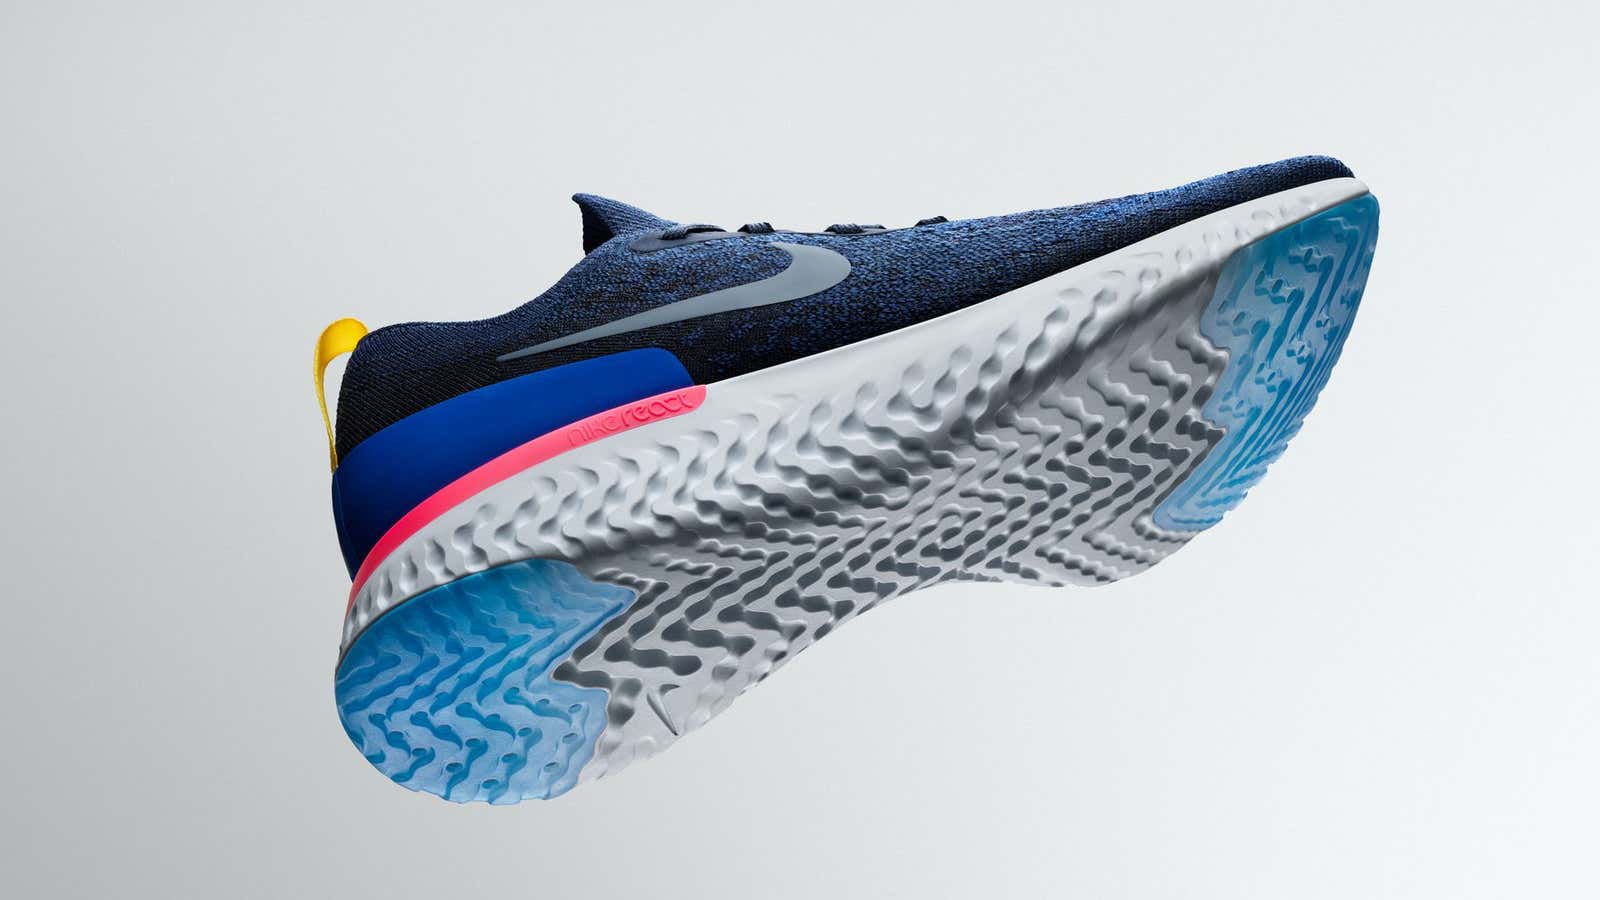 borst Incubus gemakkelijk te kwetsen Nike Epic React Flyknit: Nike's next big thing in comfortable sneakers